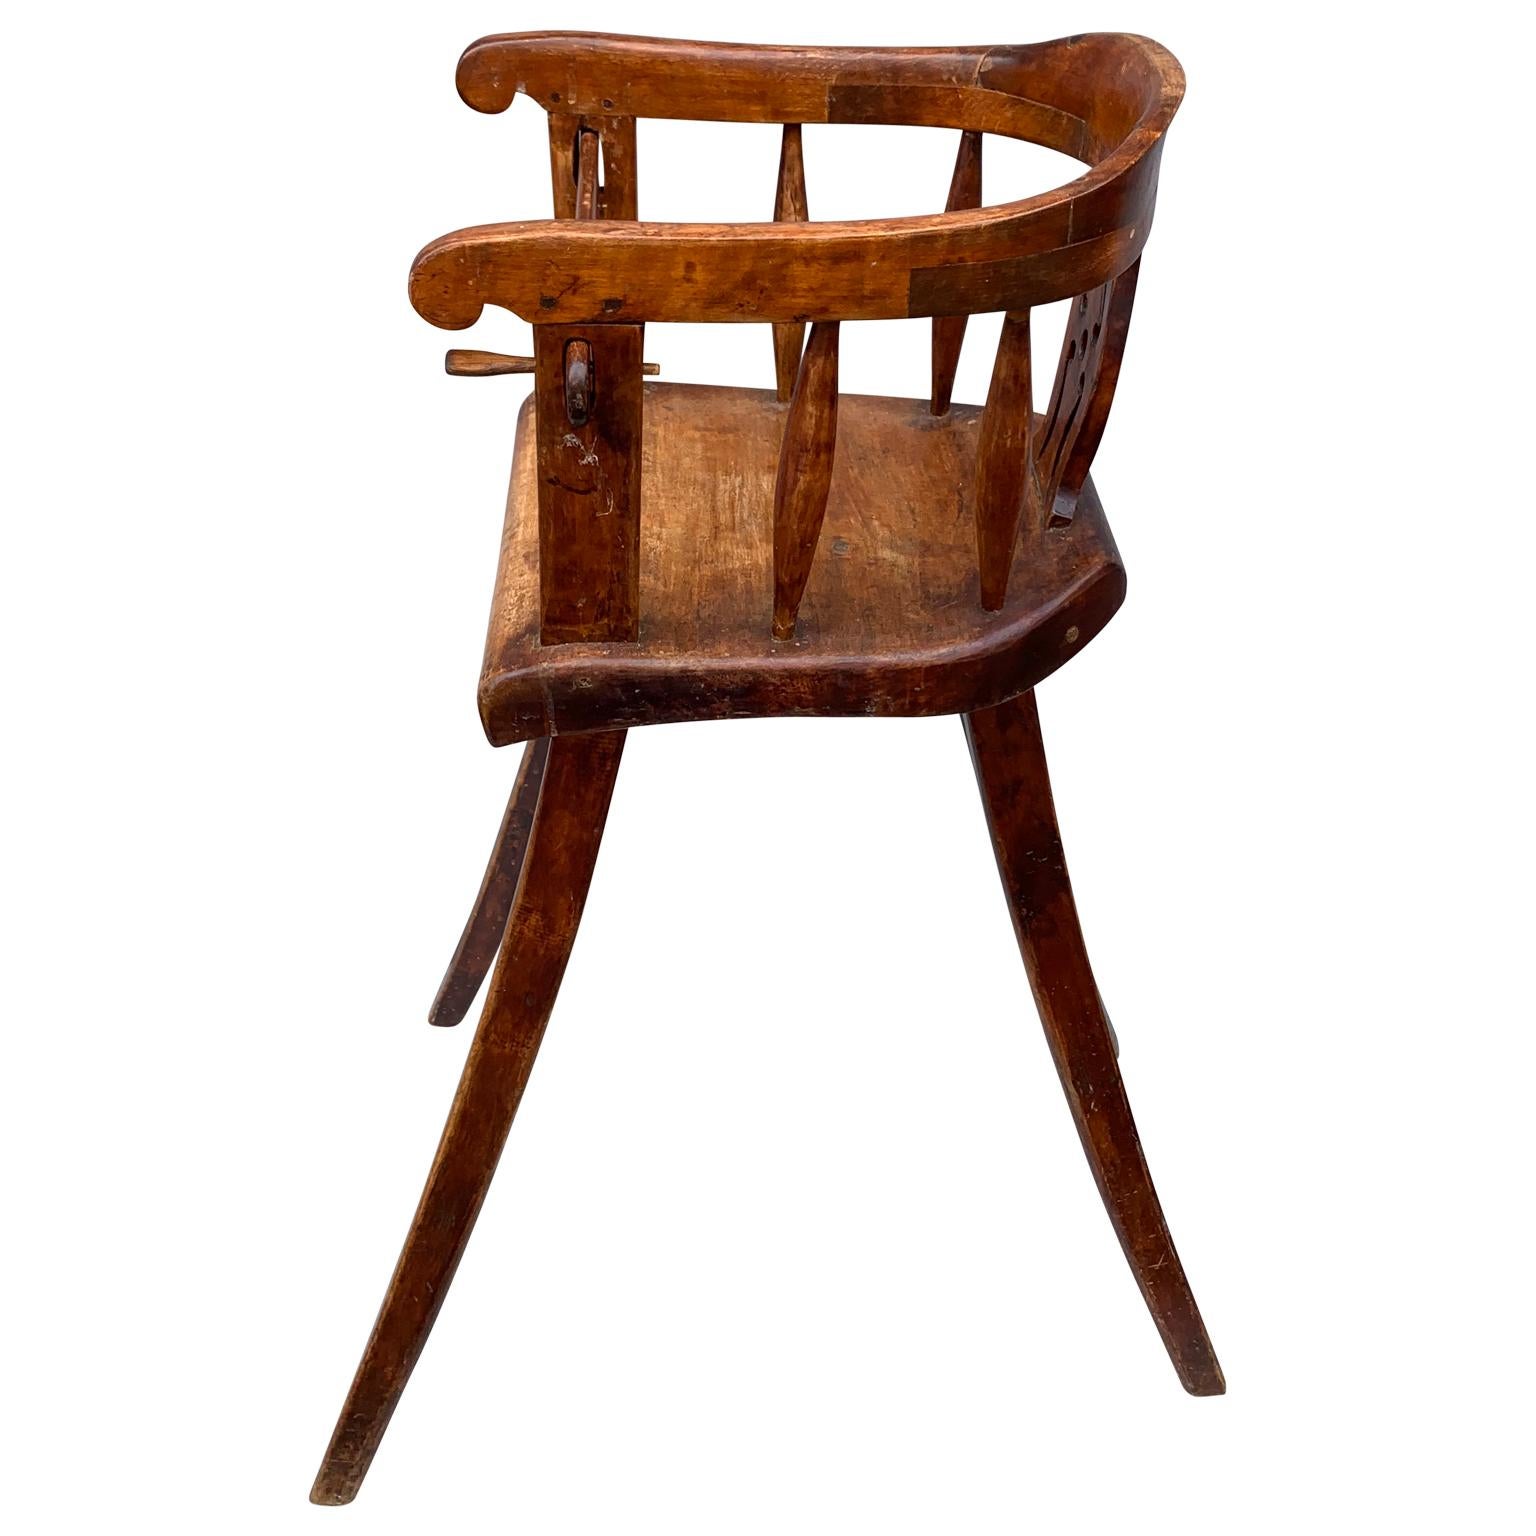 Folk Art Swedish 19th Century Wooden Child's High Chair For Sale